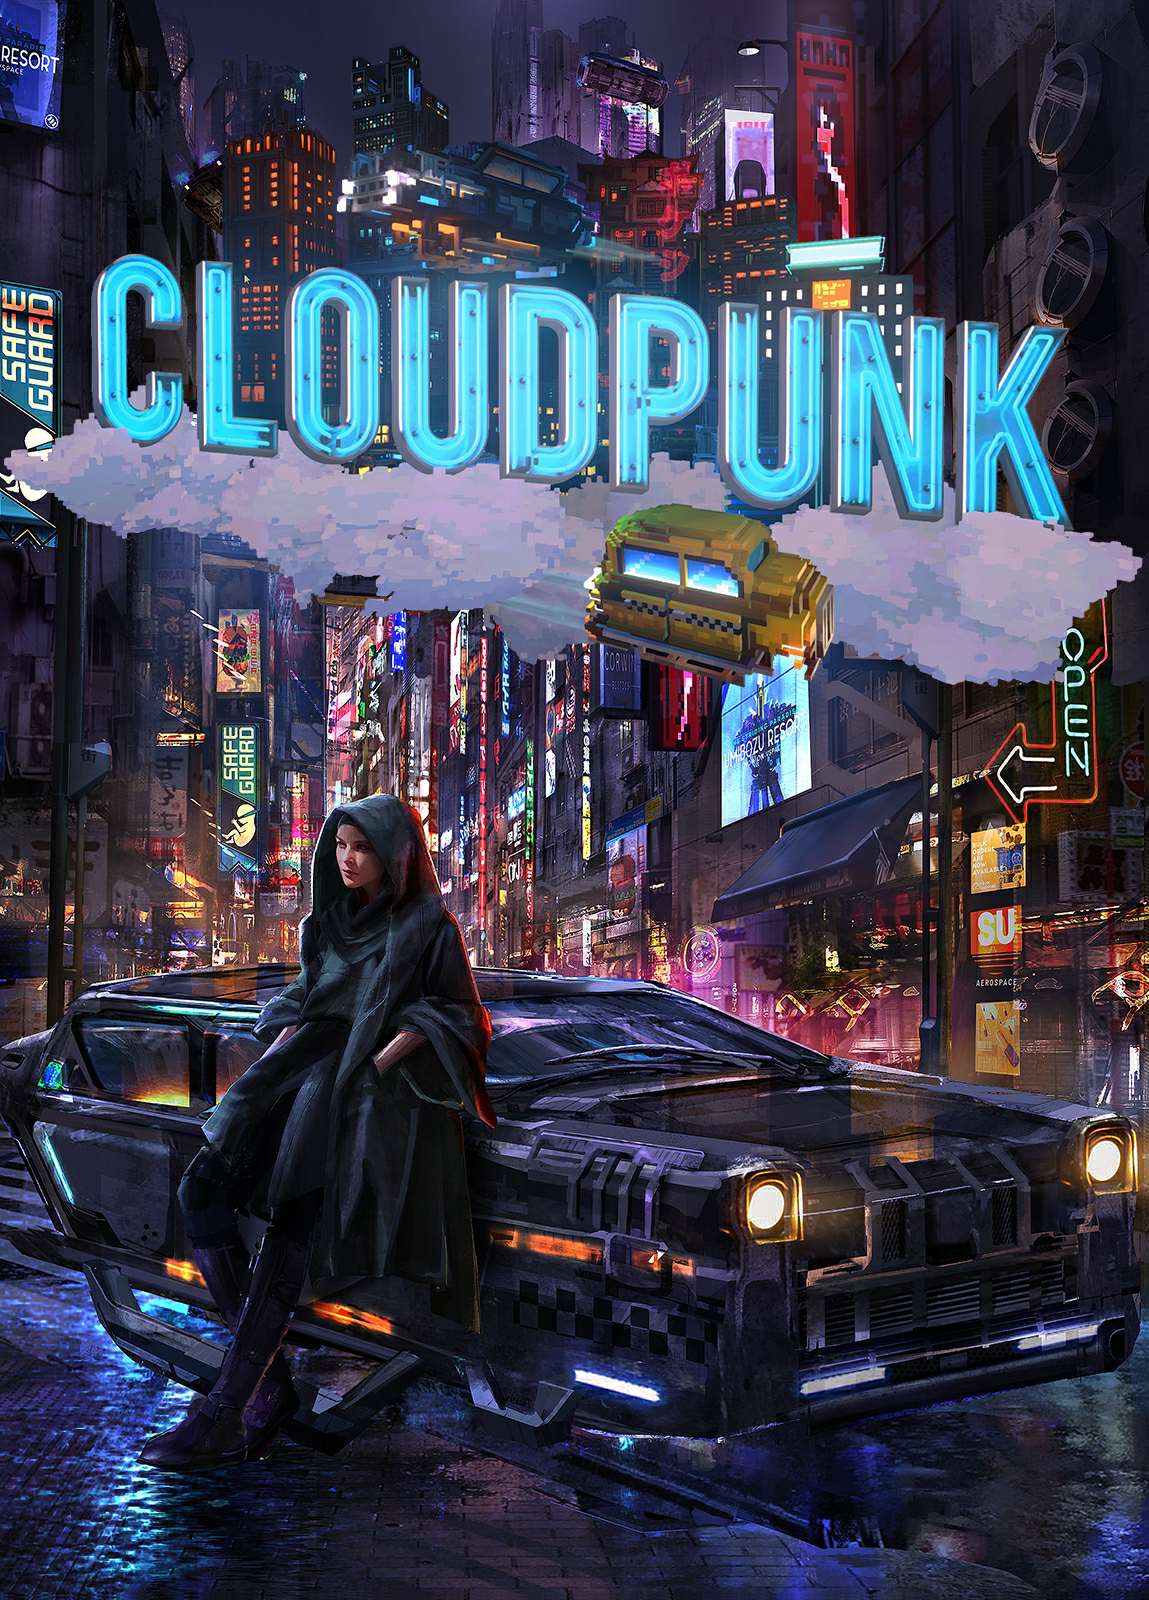 Cloudpunk: Ultimate Edition